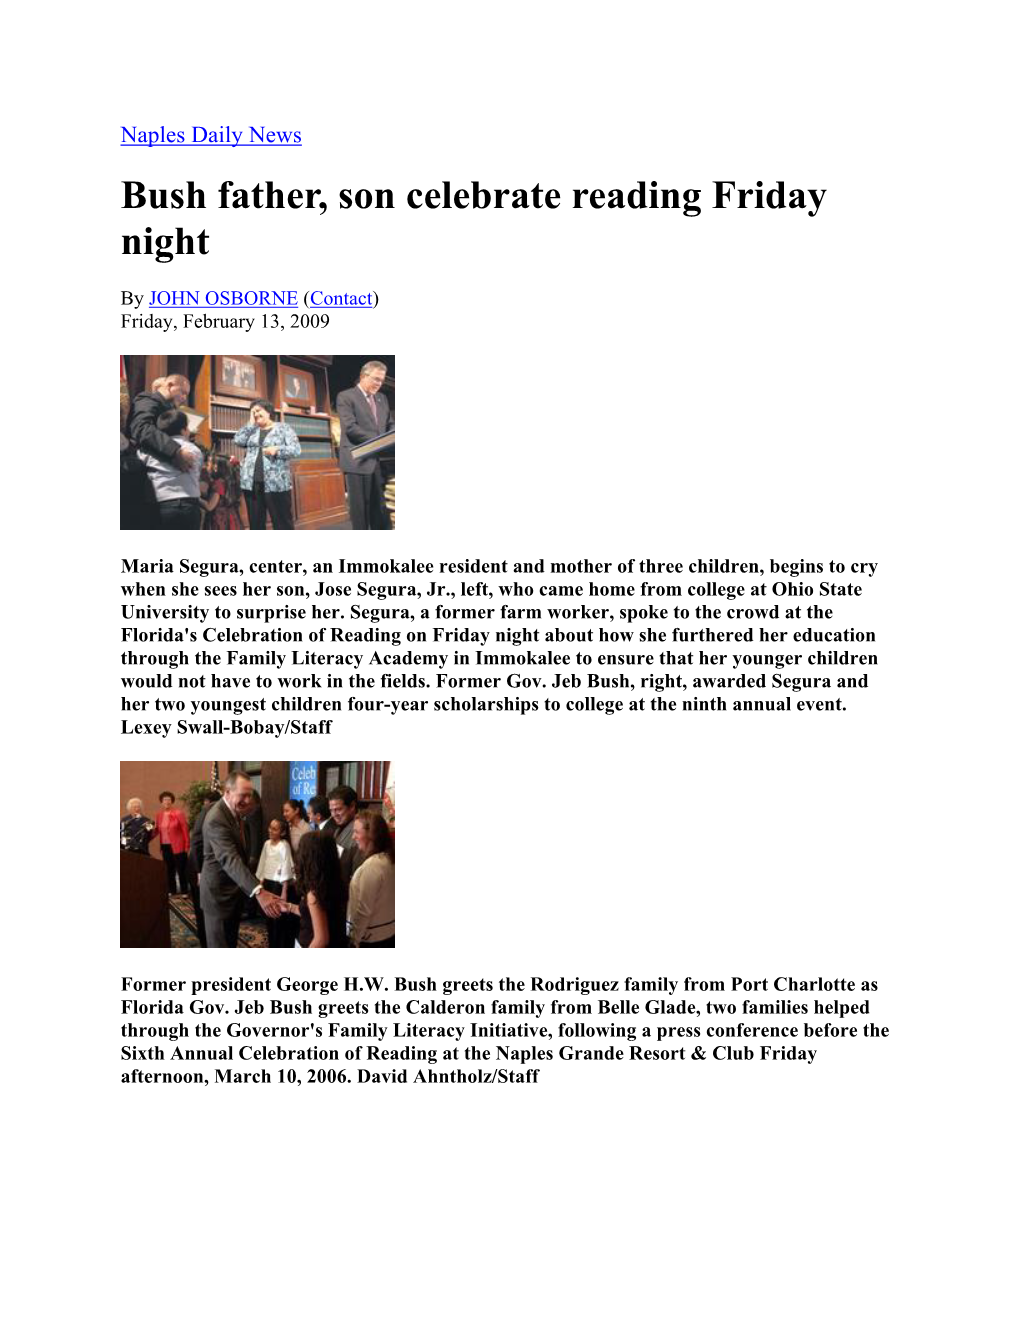 Bush Father, Son Celebrate Reading Friday Night